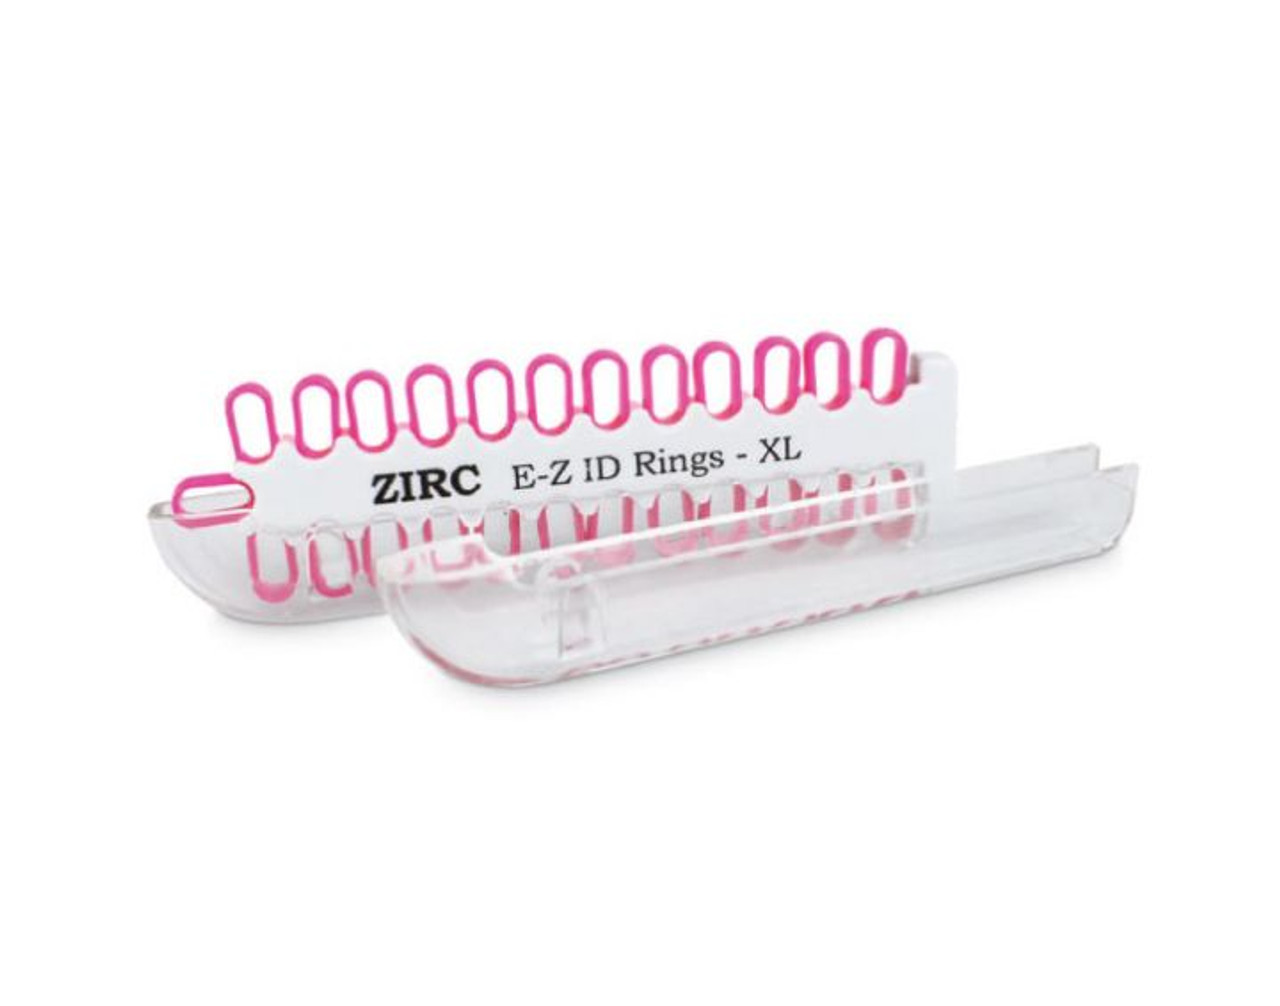 Zirc E-Z ID Rings XL, Green, 25pk